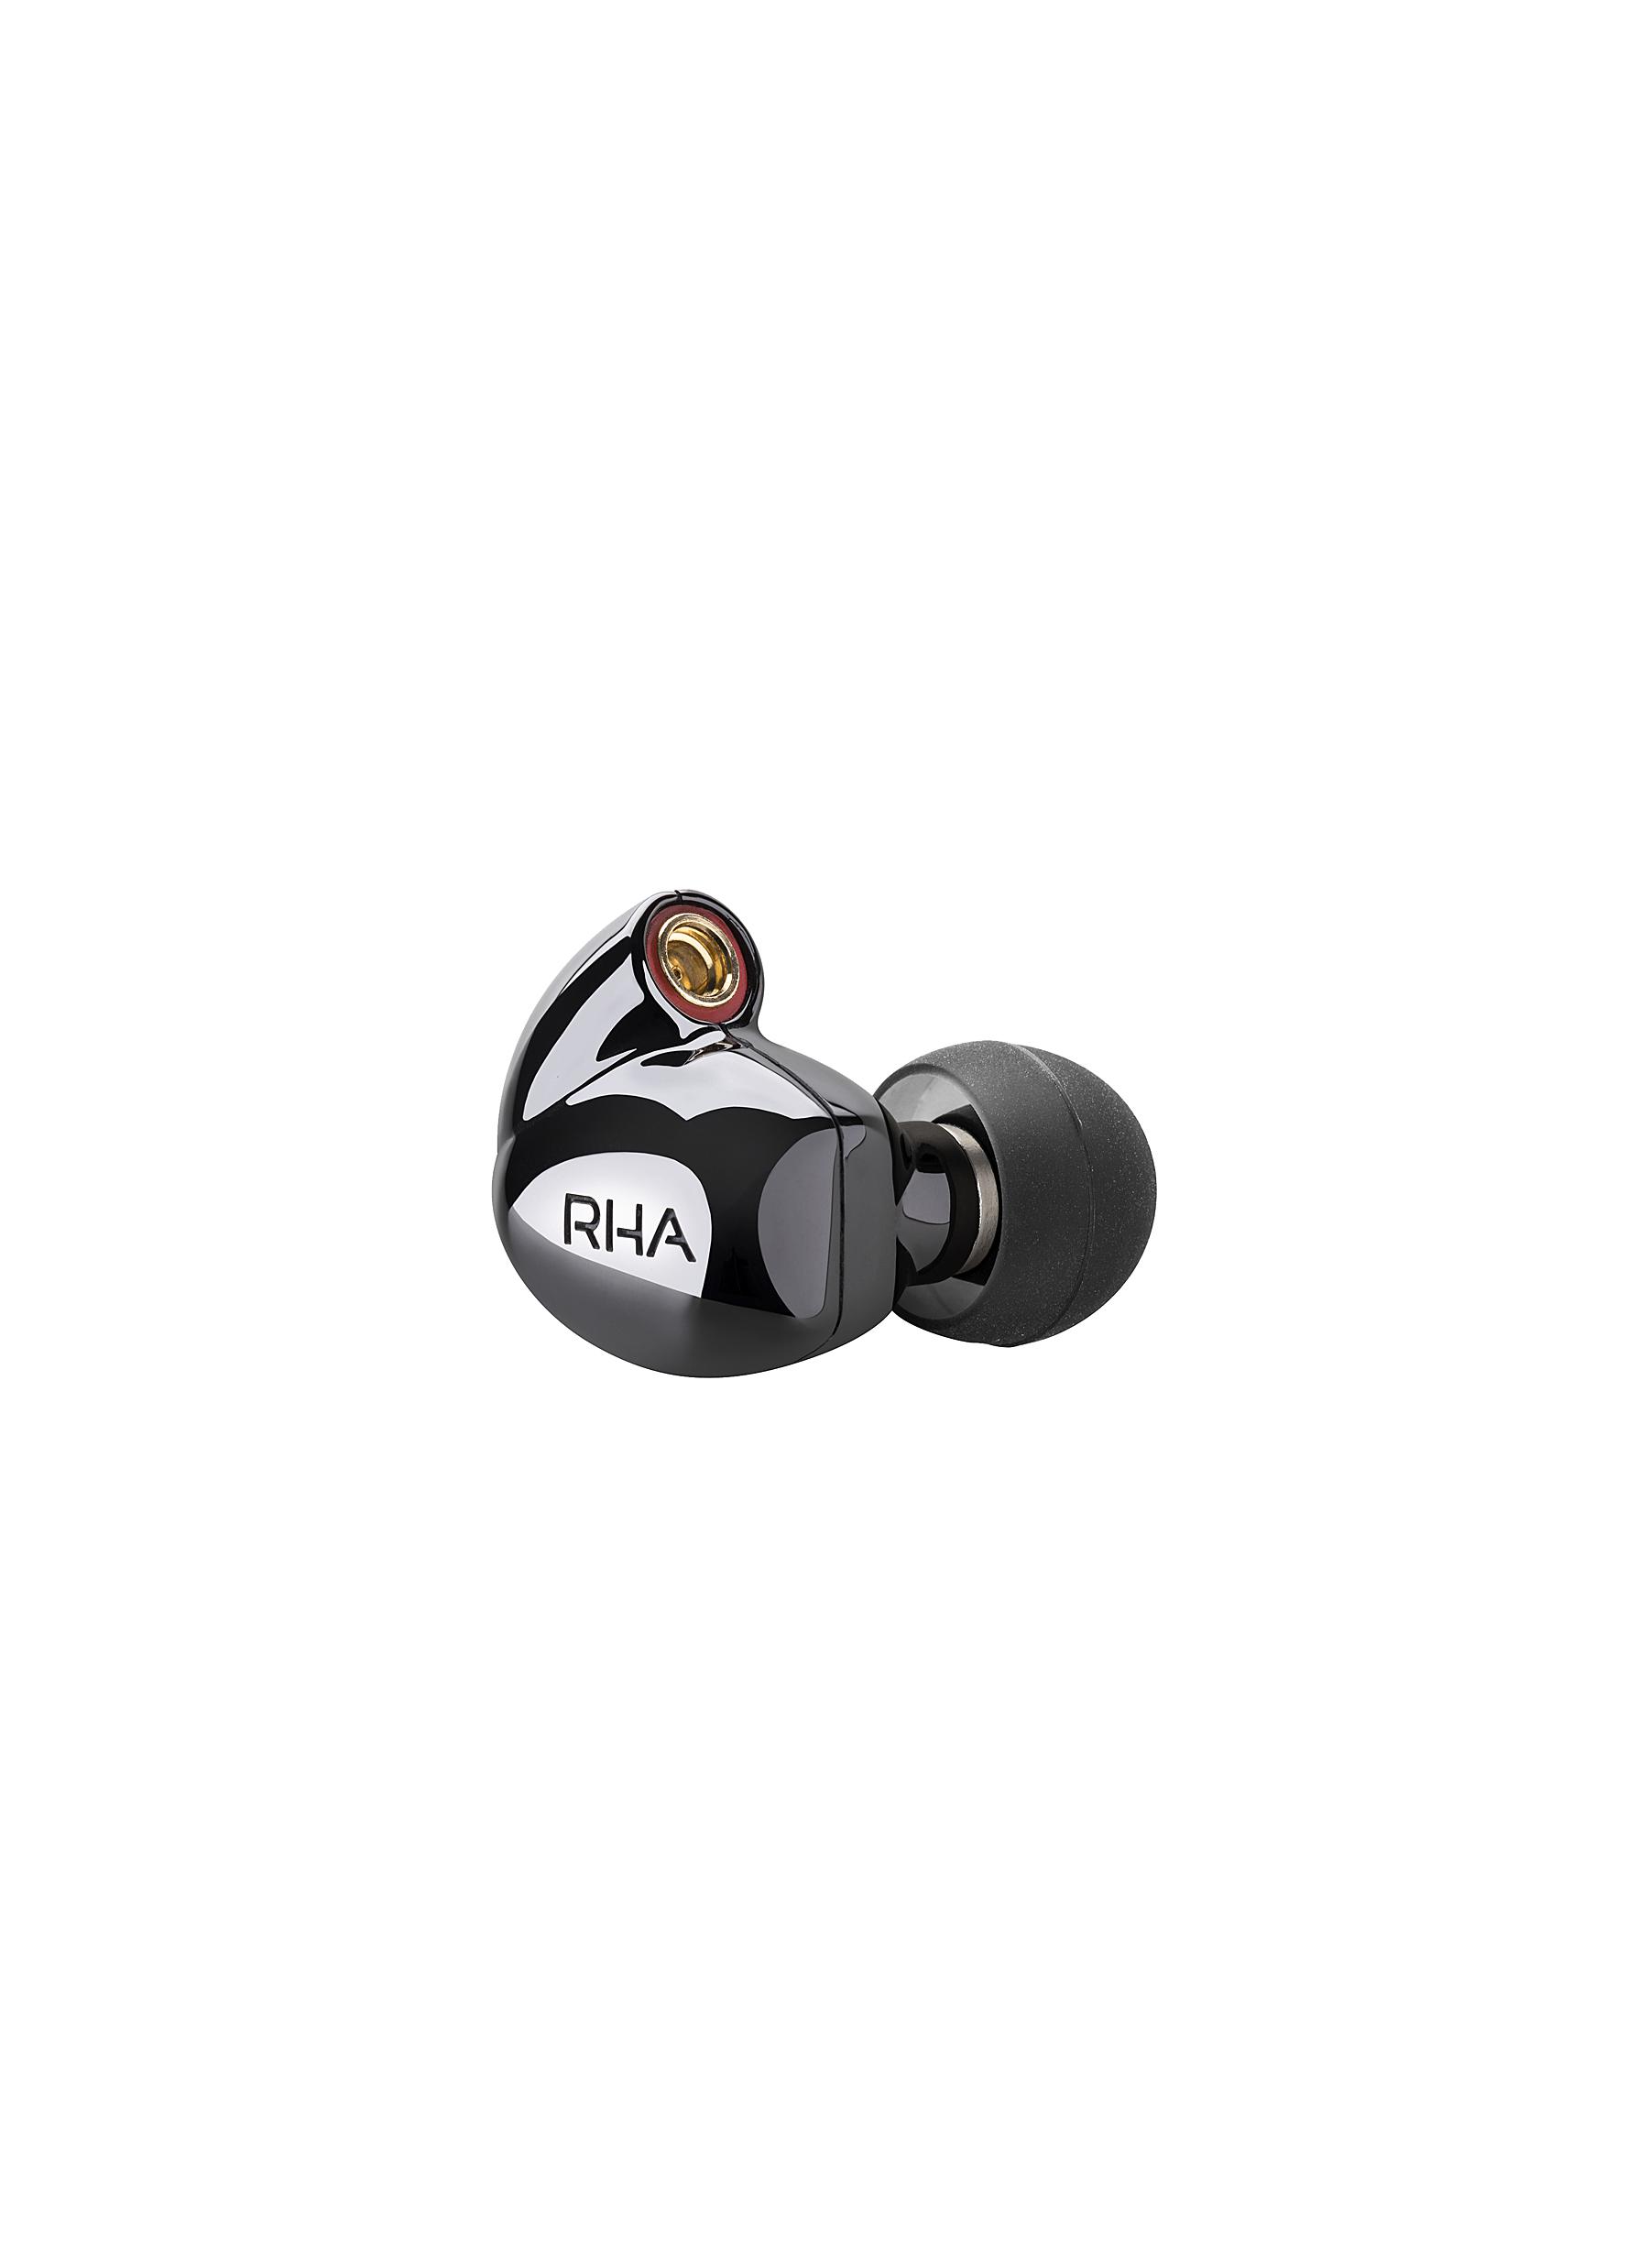 CL2 Planar magnetic headphones